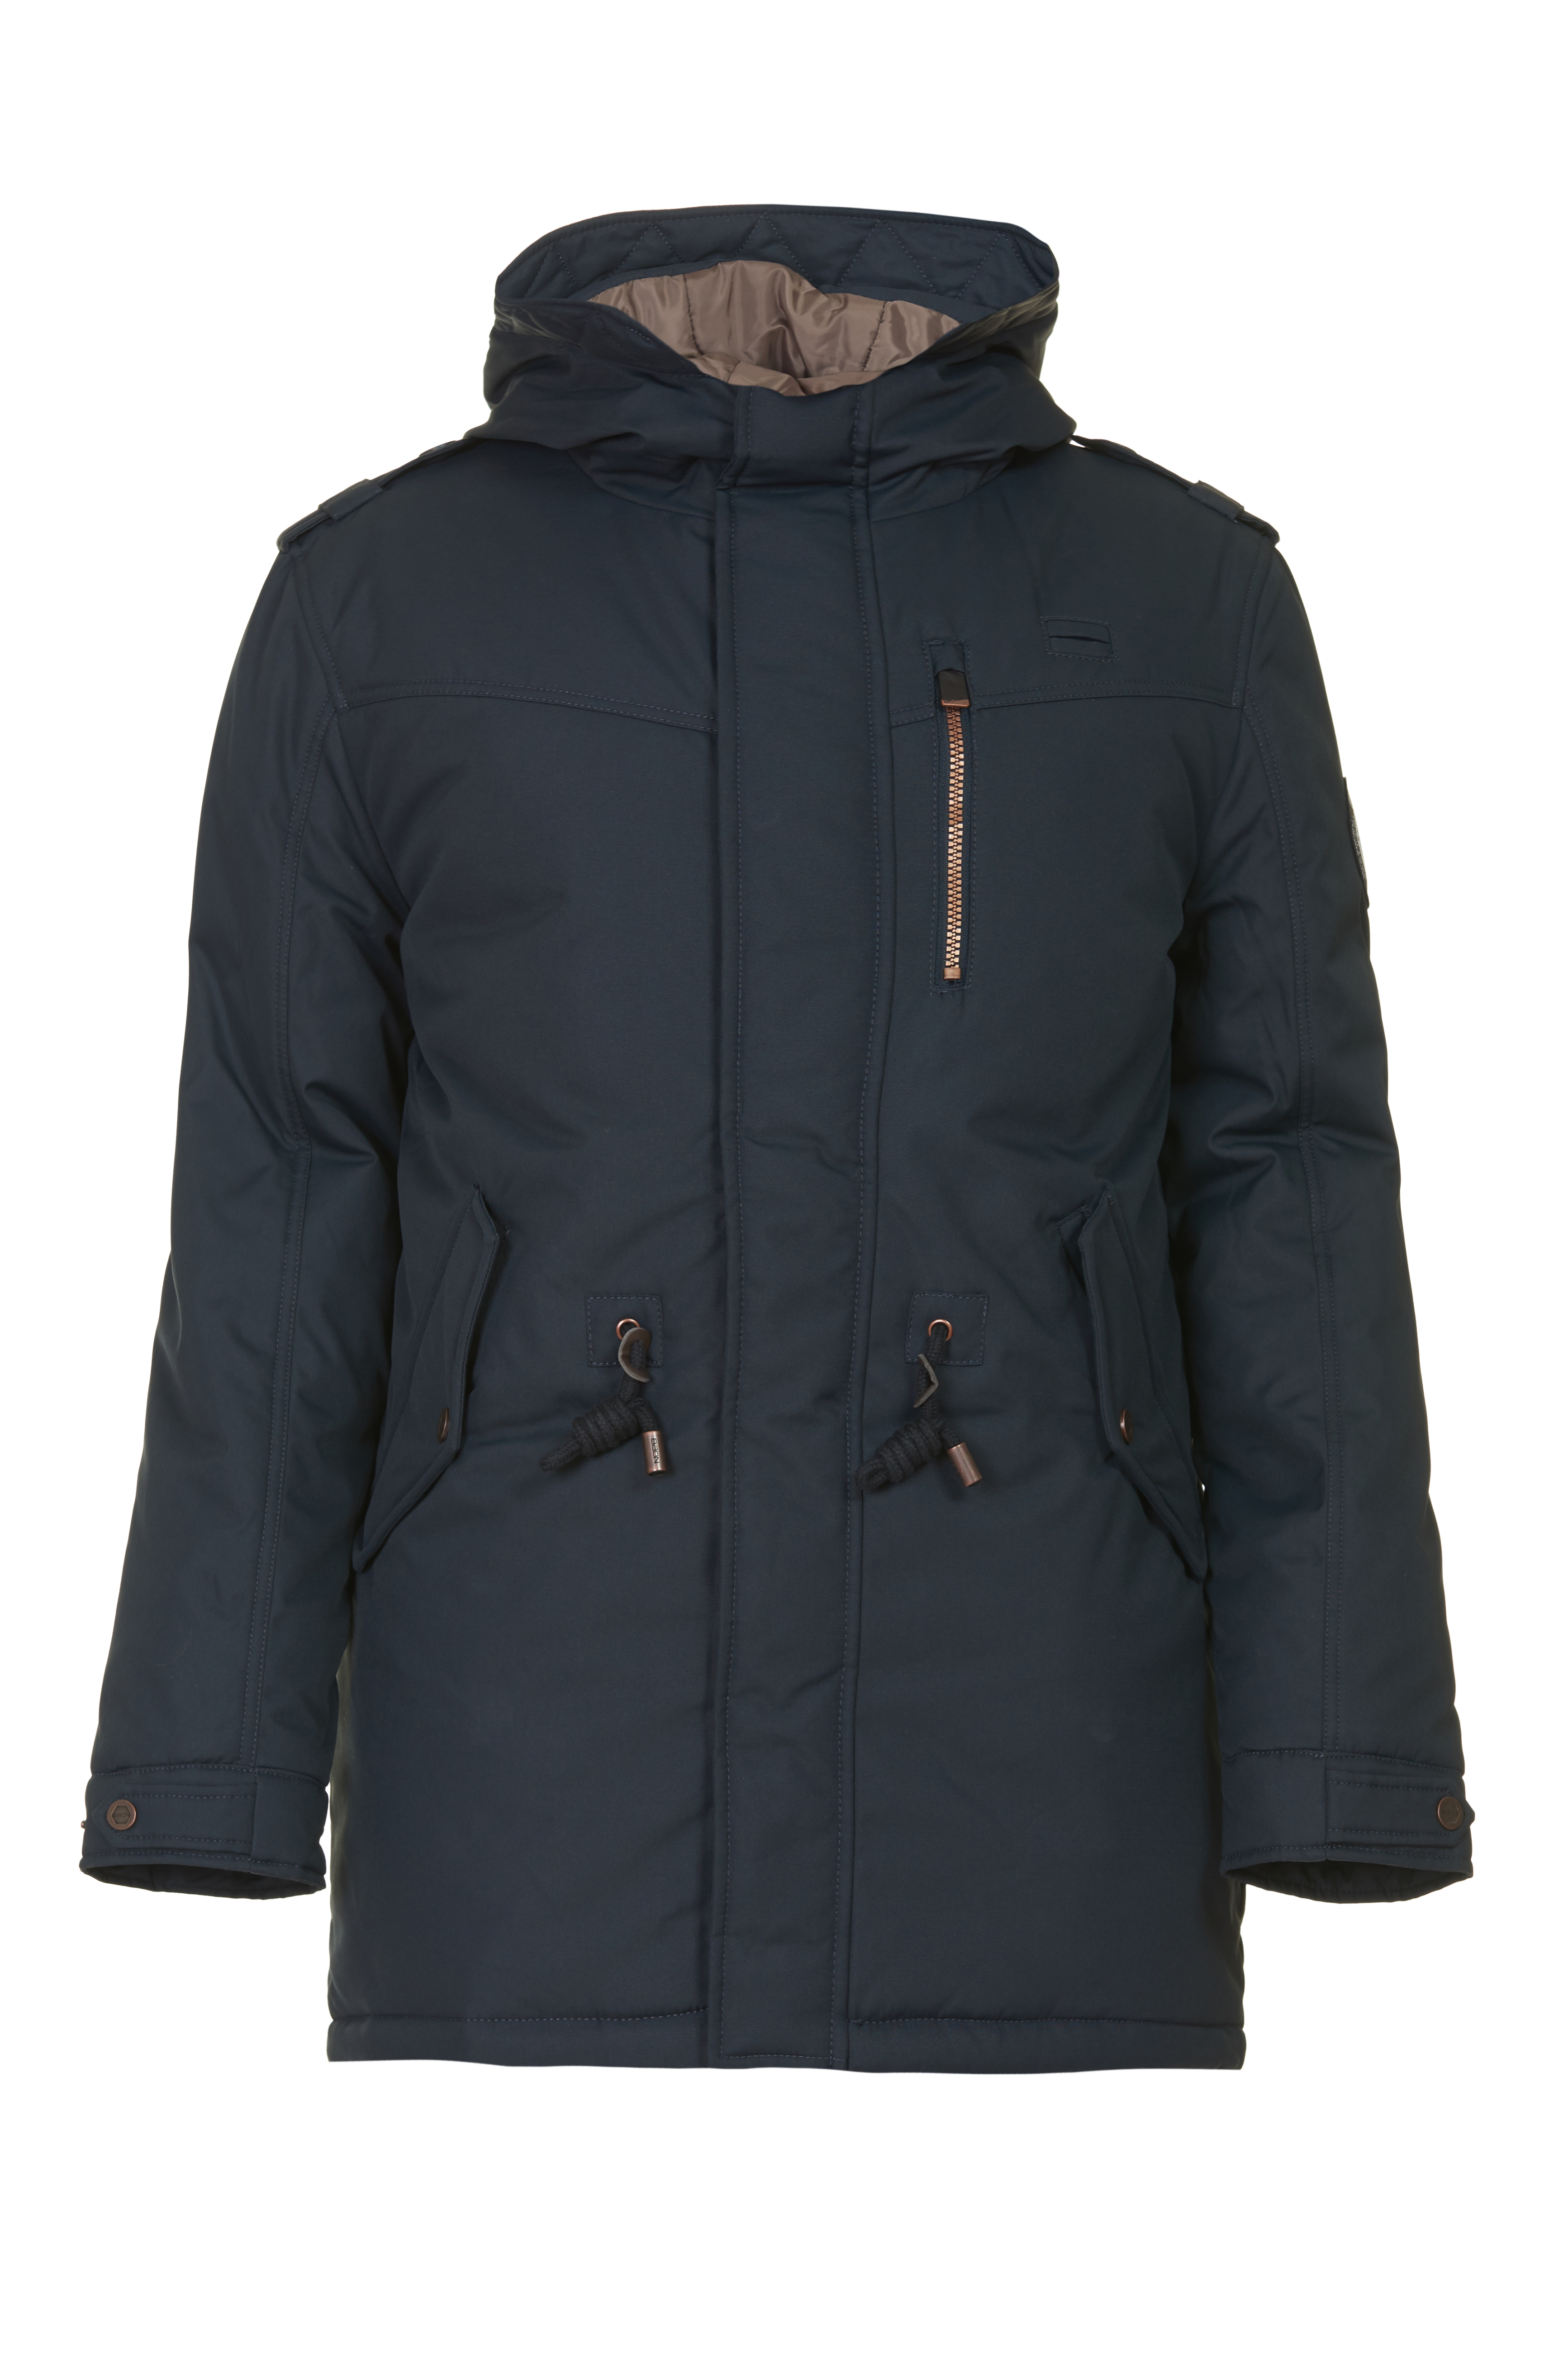 Удлинённая куртка-парка (арт. baon B537513), размер XL, цвет синий Удлинённая куртка-парка (арт. baon B537513) - фото 3